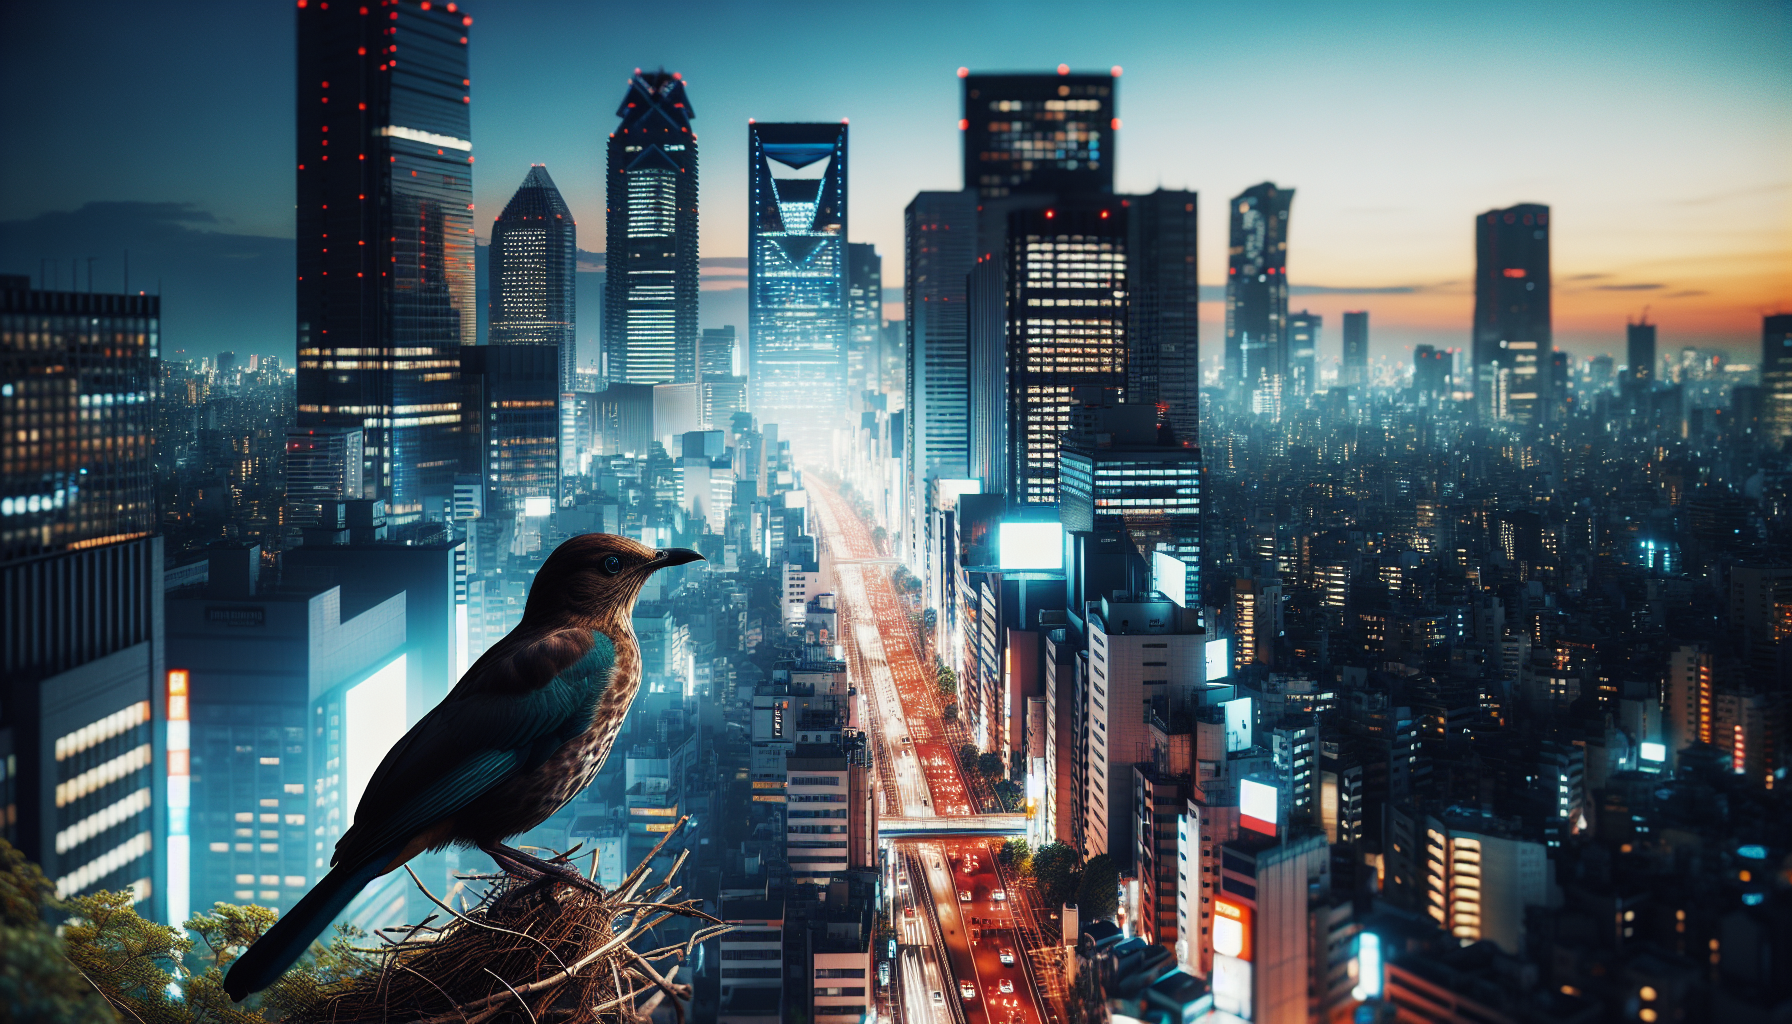 Do wild birds ever leave the city?